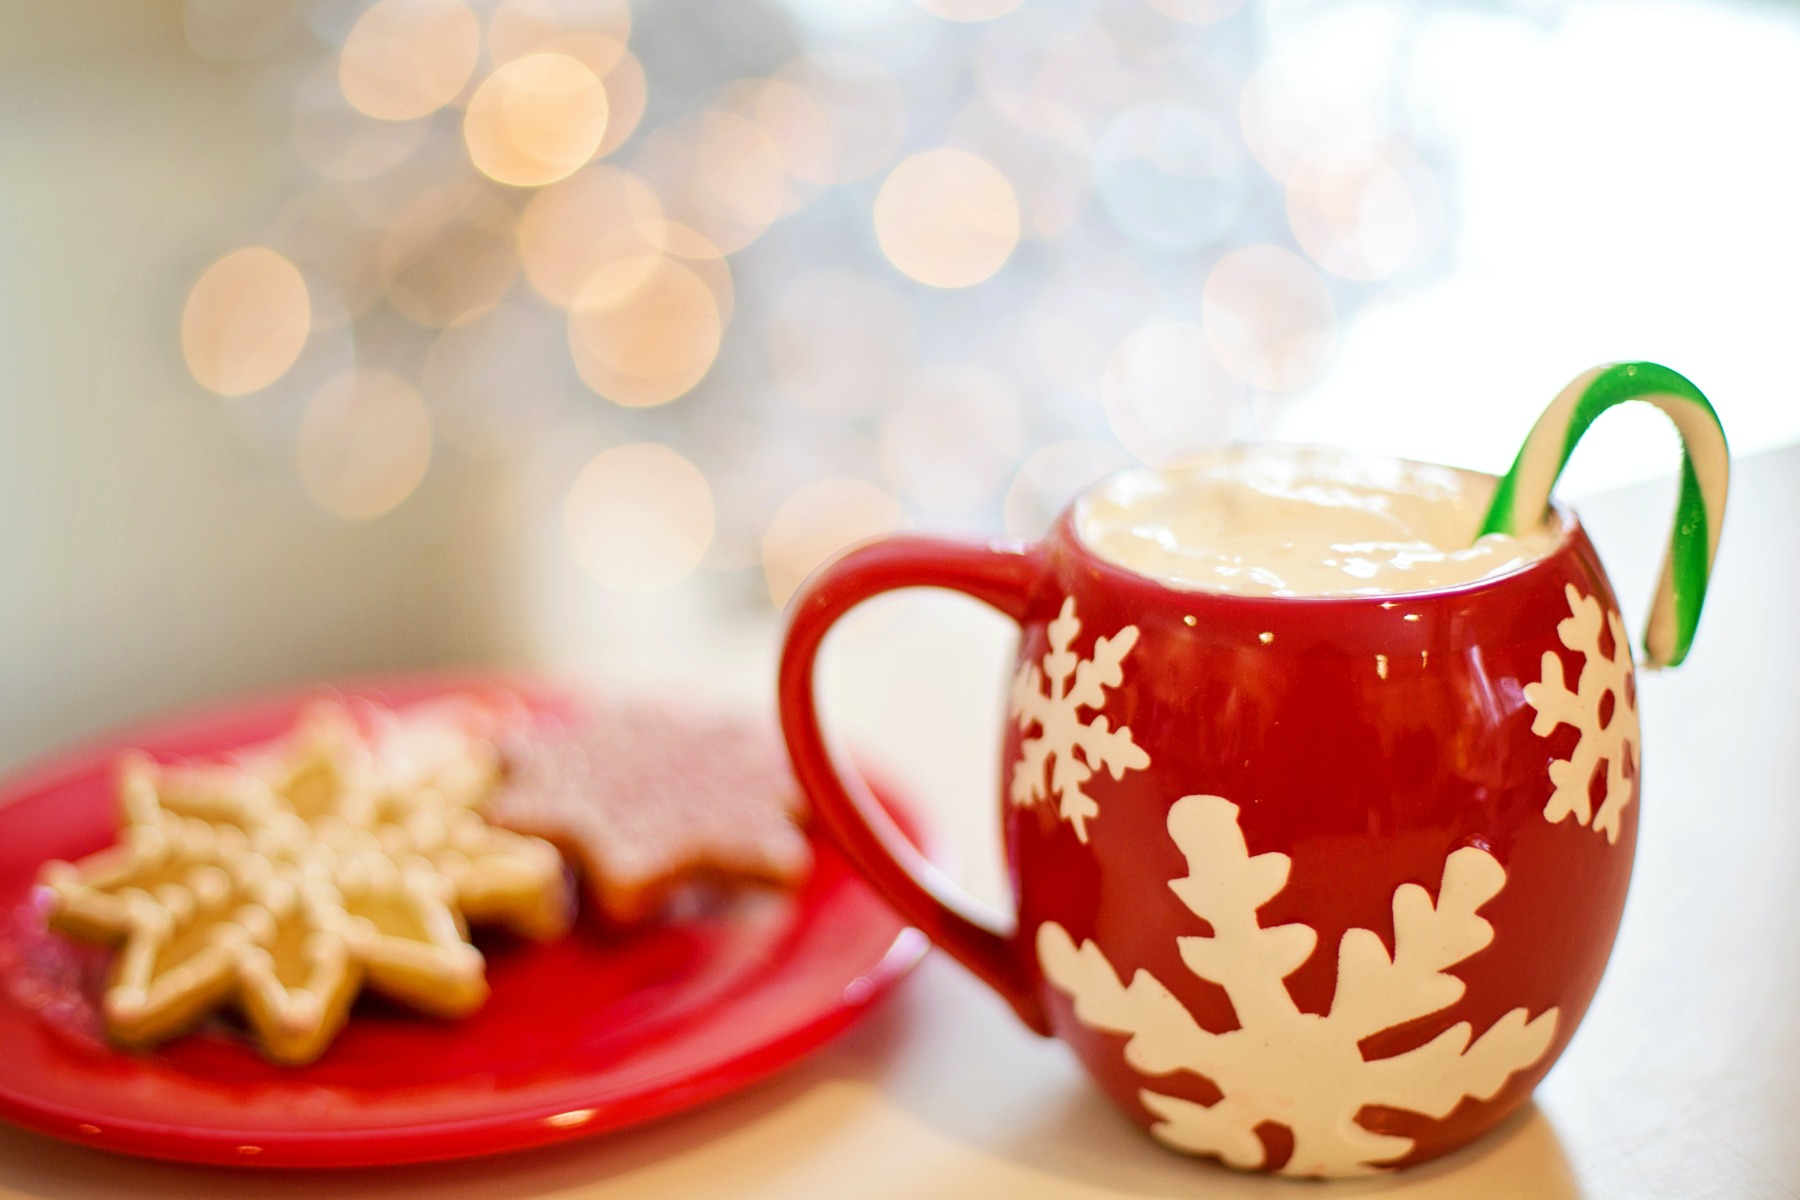 Hot chocolate in a Christmas mug